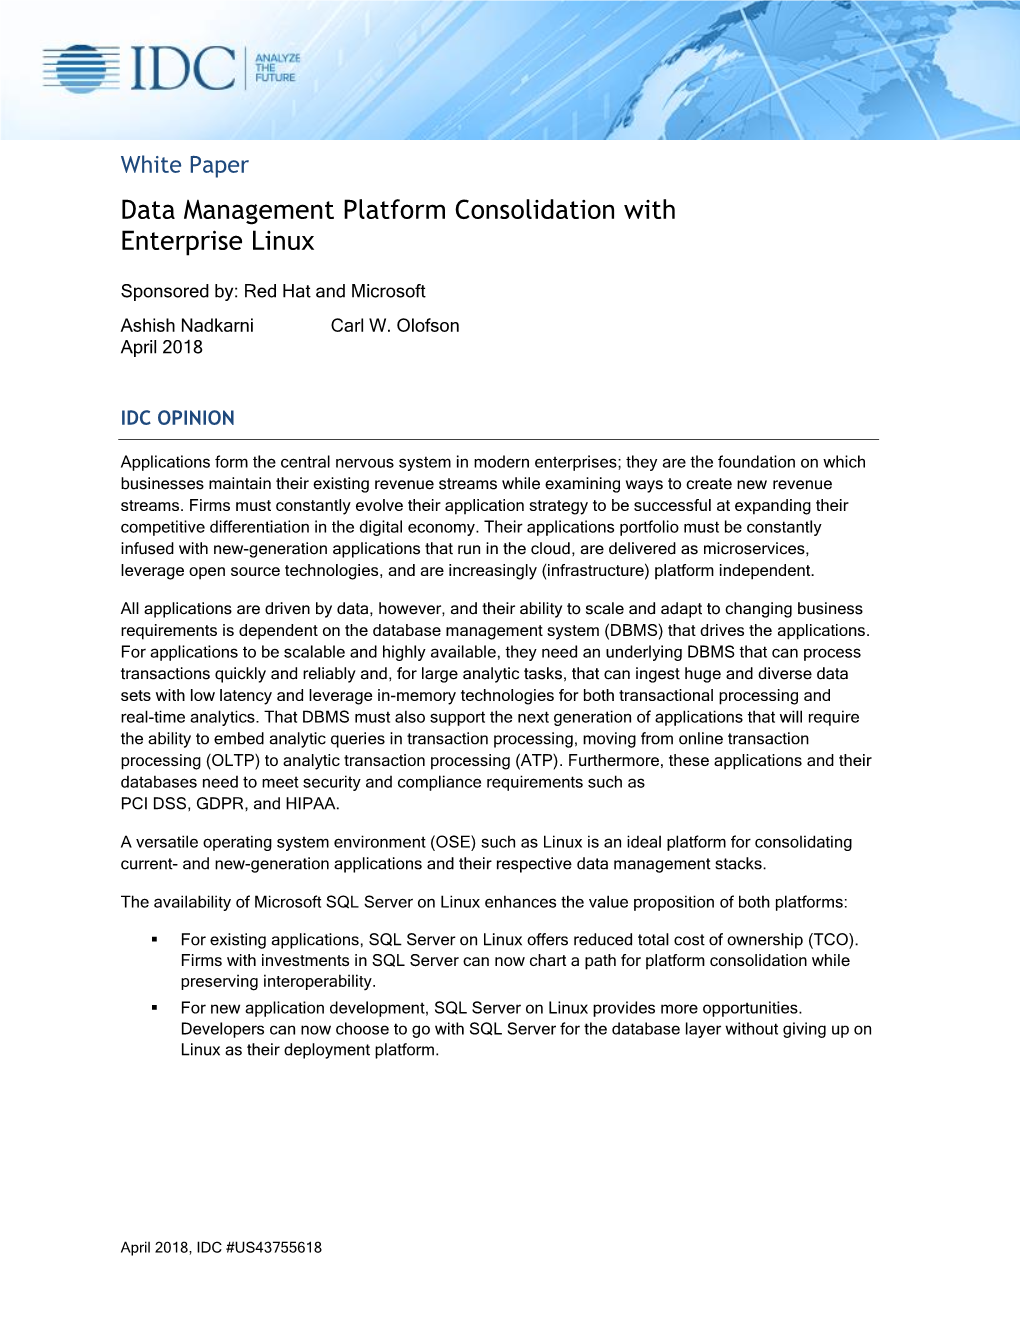 Data Management Platform Consolidation with Enterprise Linux